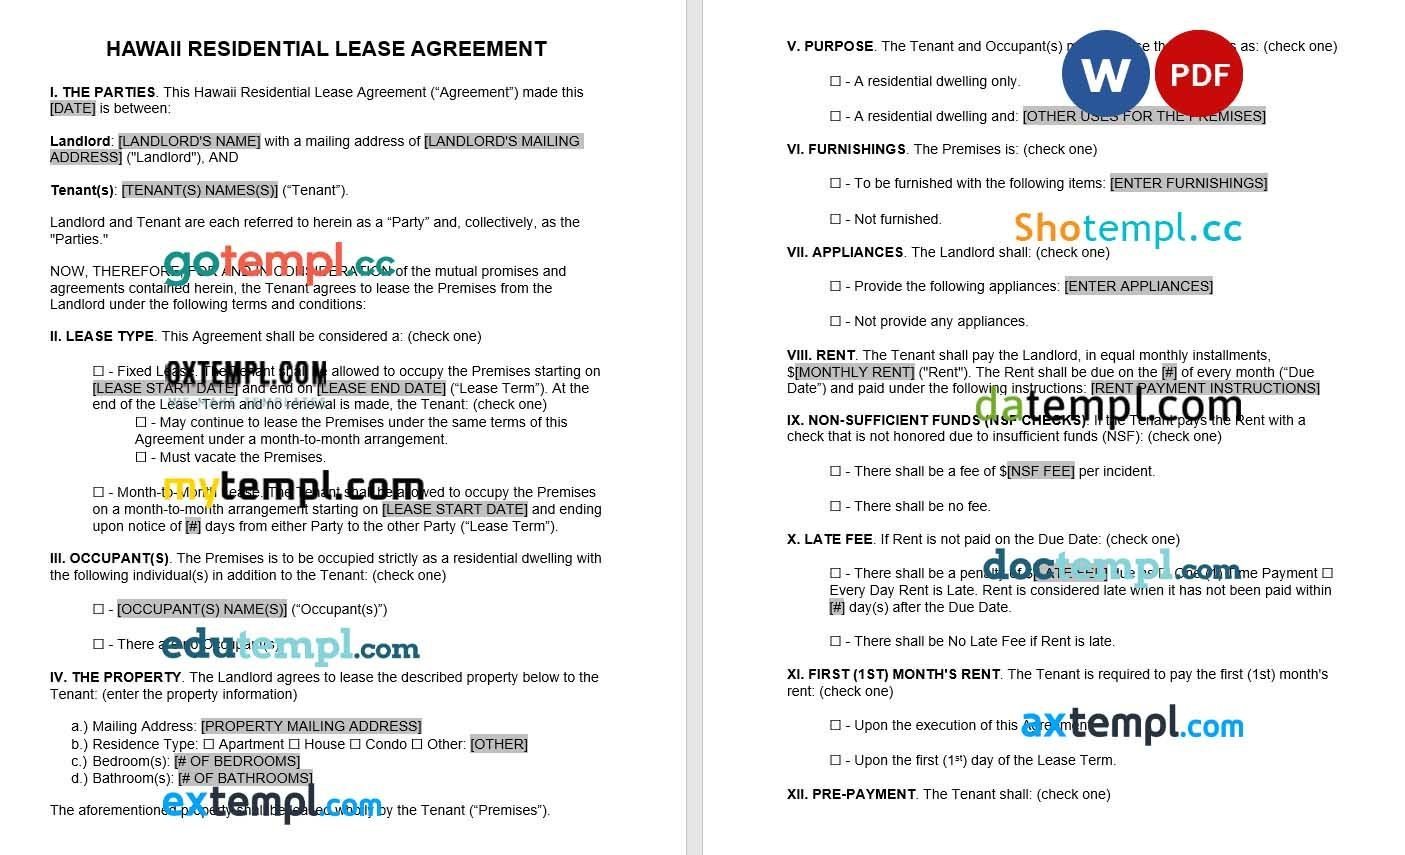 Blank Lease Agreement example, fully editable